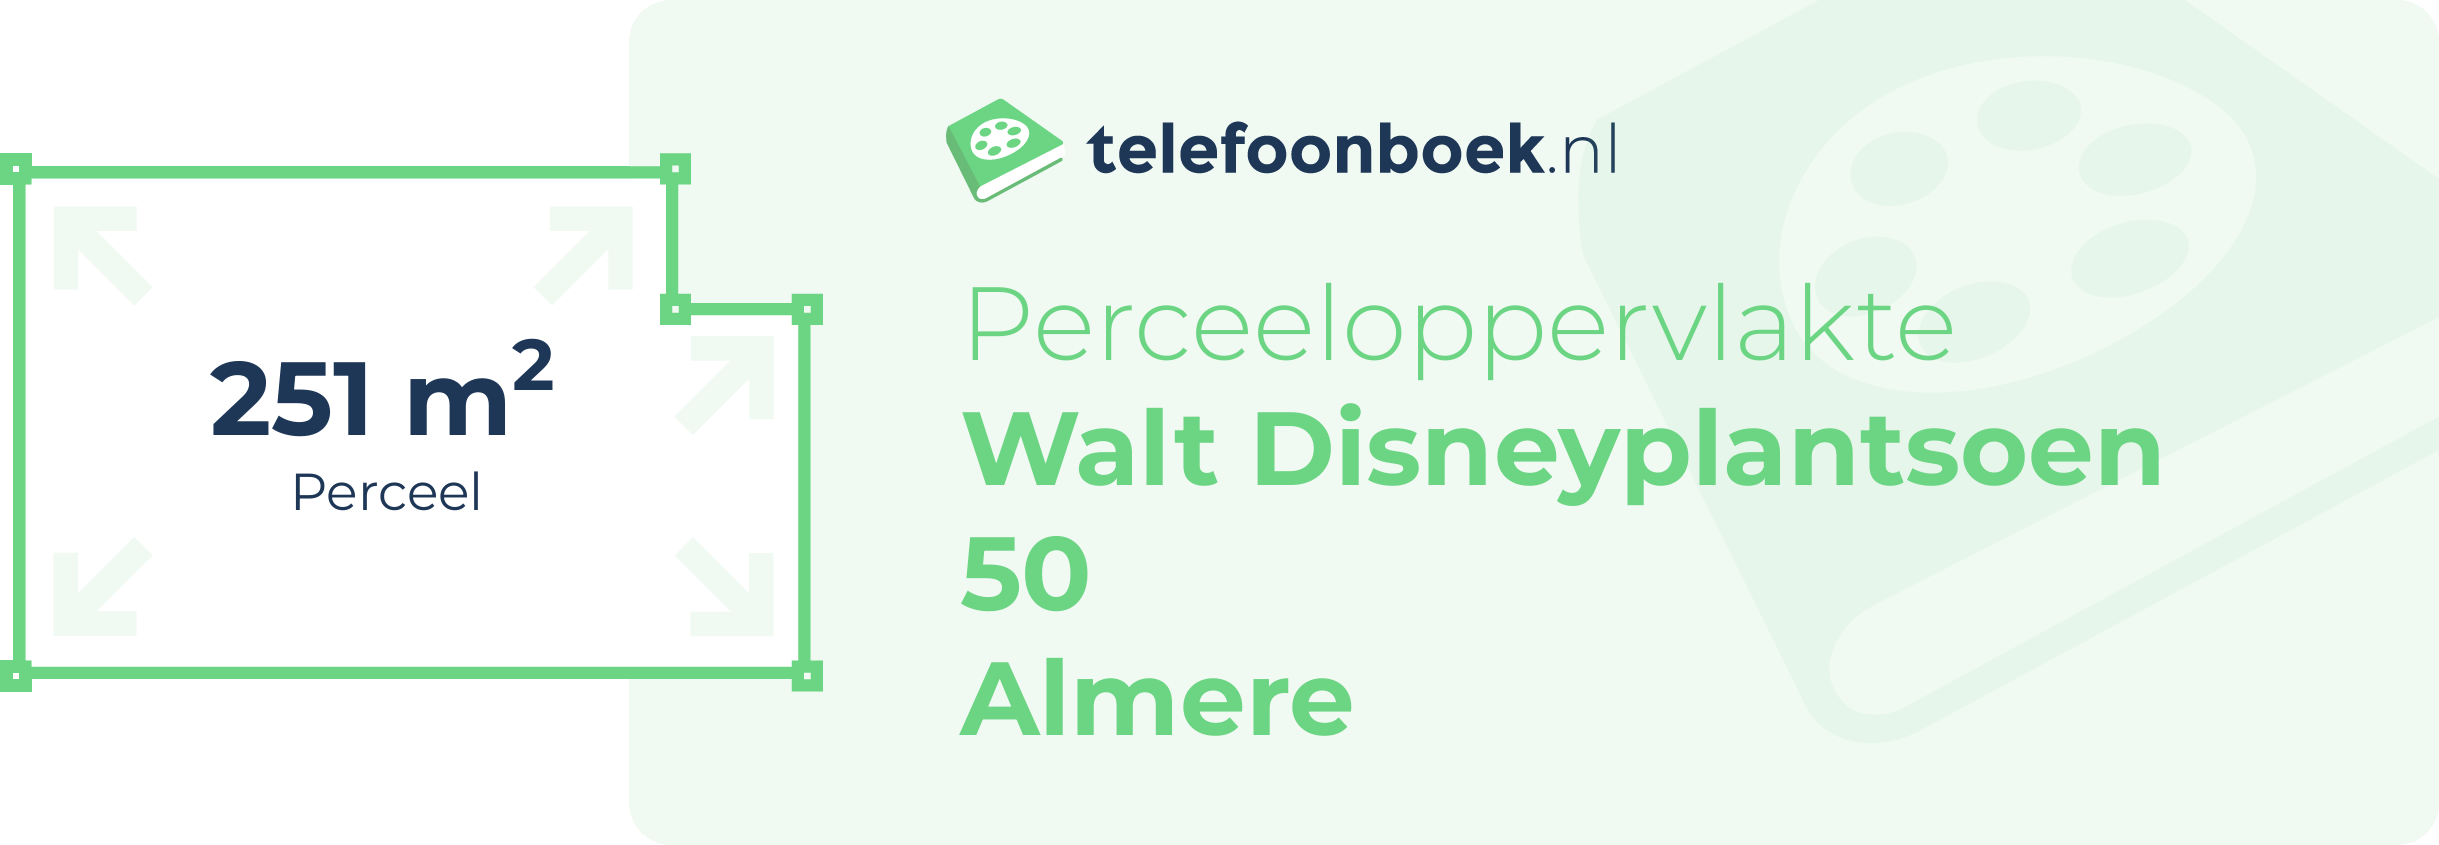 Perceeloppervlakte Walt Disneyplantsoen 50 Almere